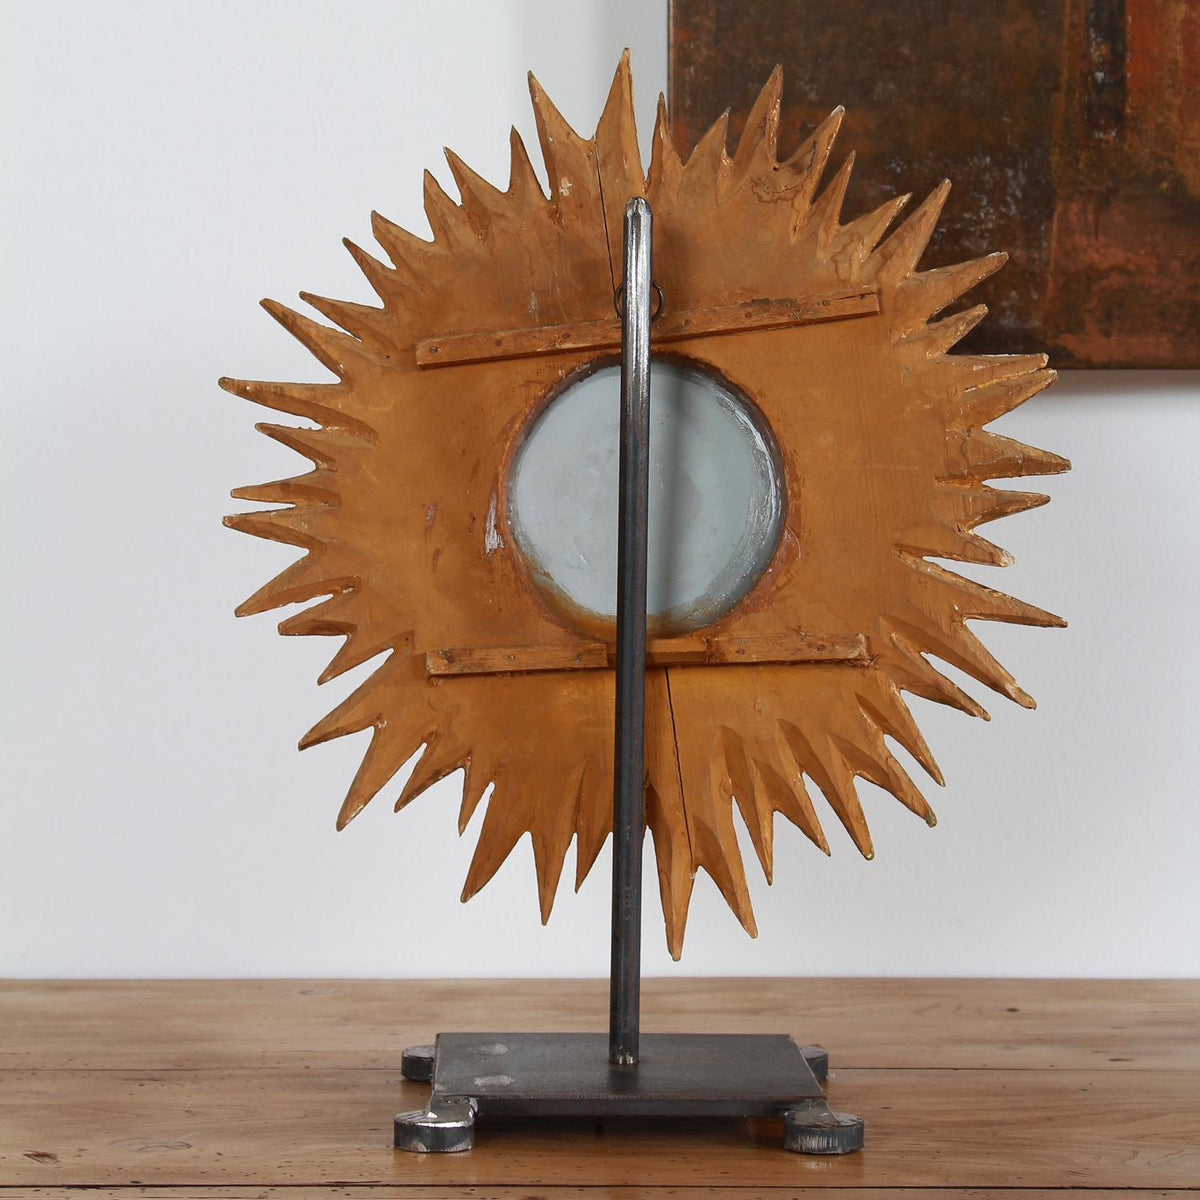 French Sunburst Mirror on Hand Forged Iron Stand